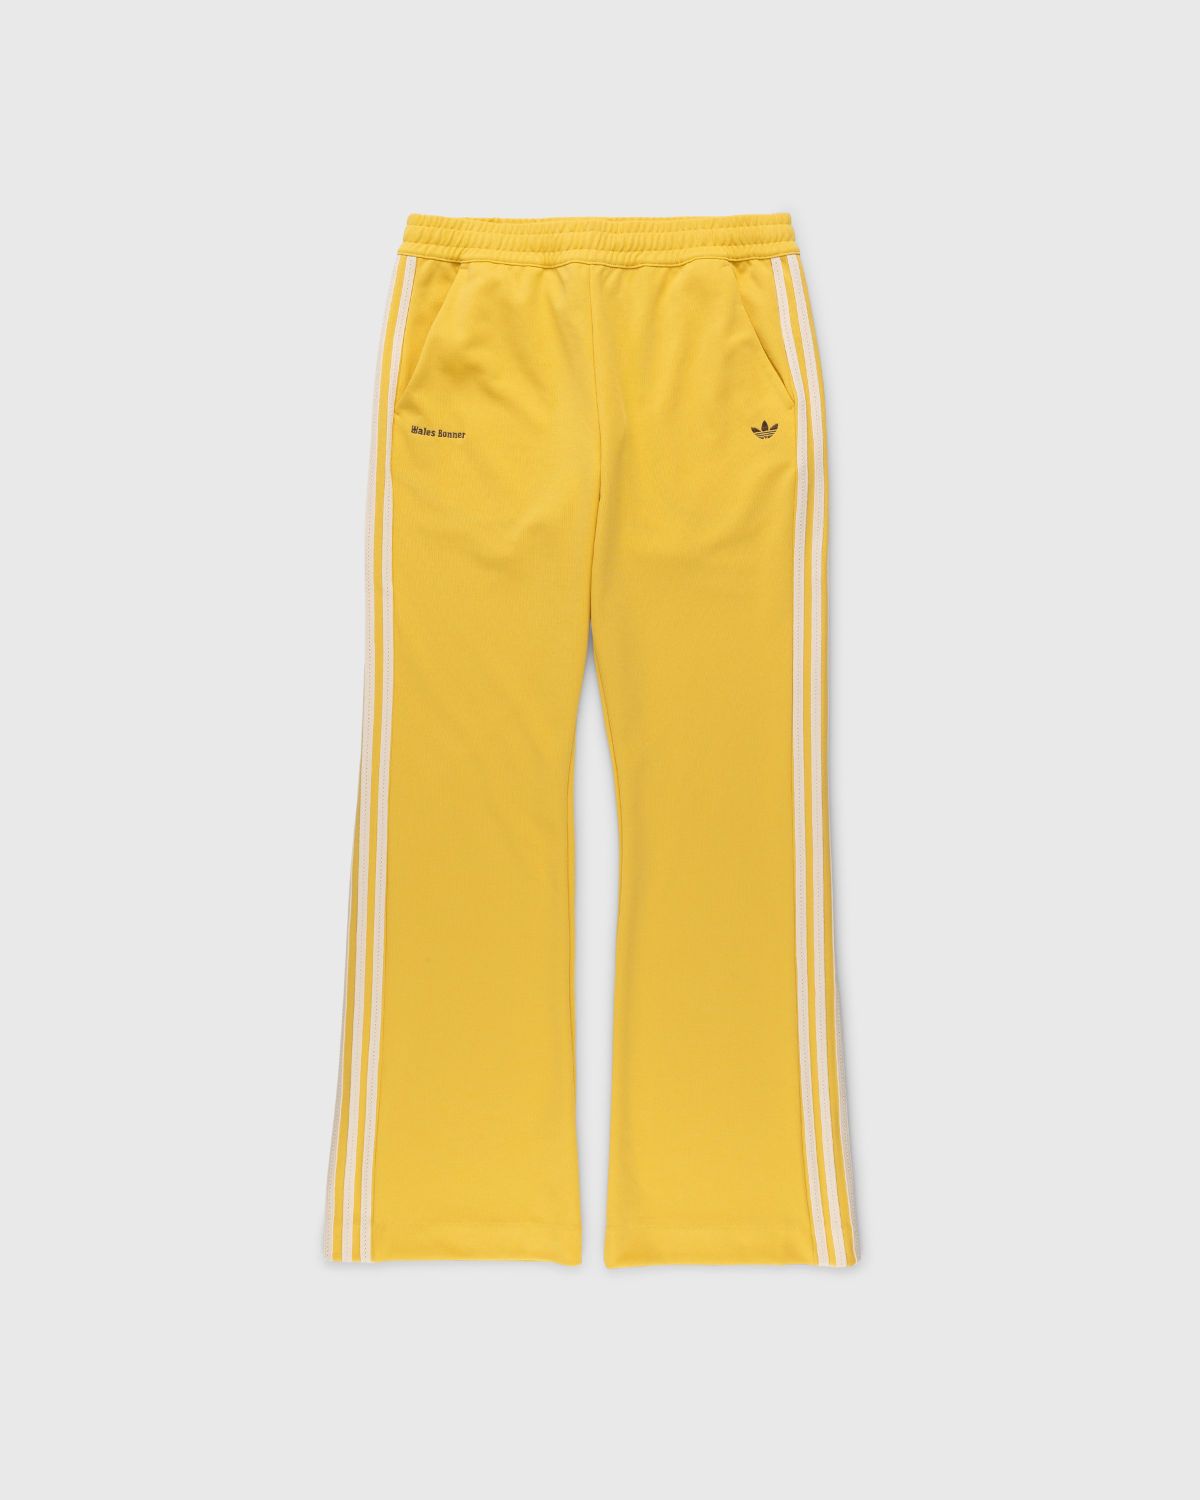 Adidas x Wales Bonner – WB Track Pants St Fade Gold - Track Pants - Yellow - Image 1